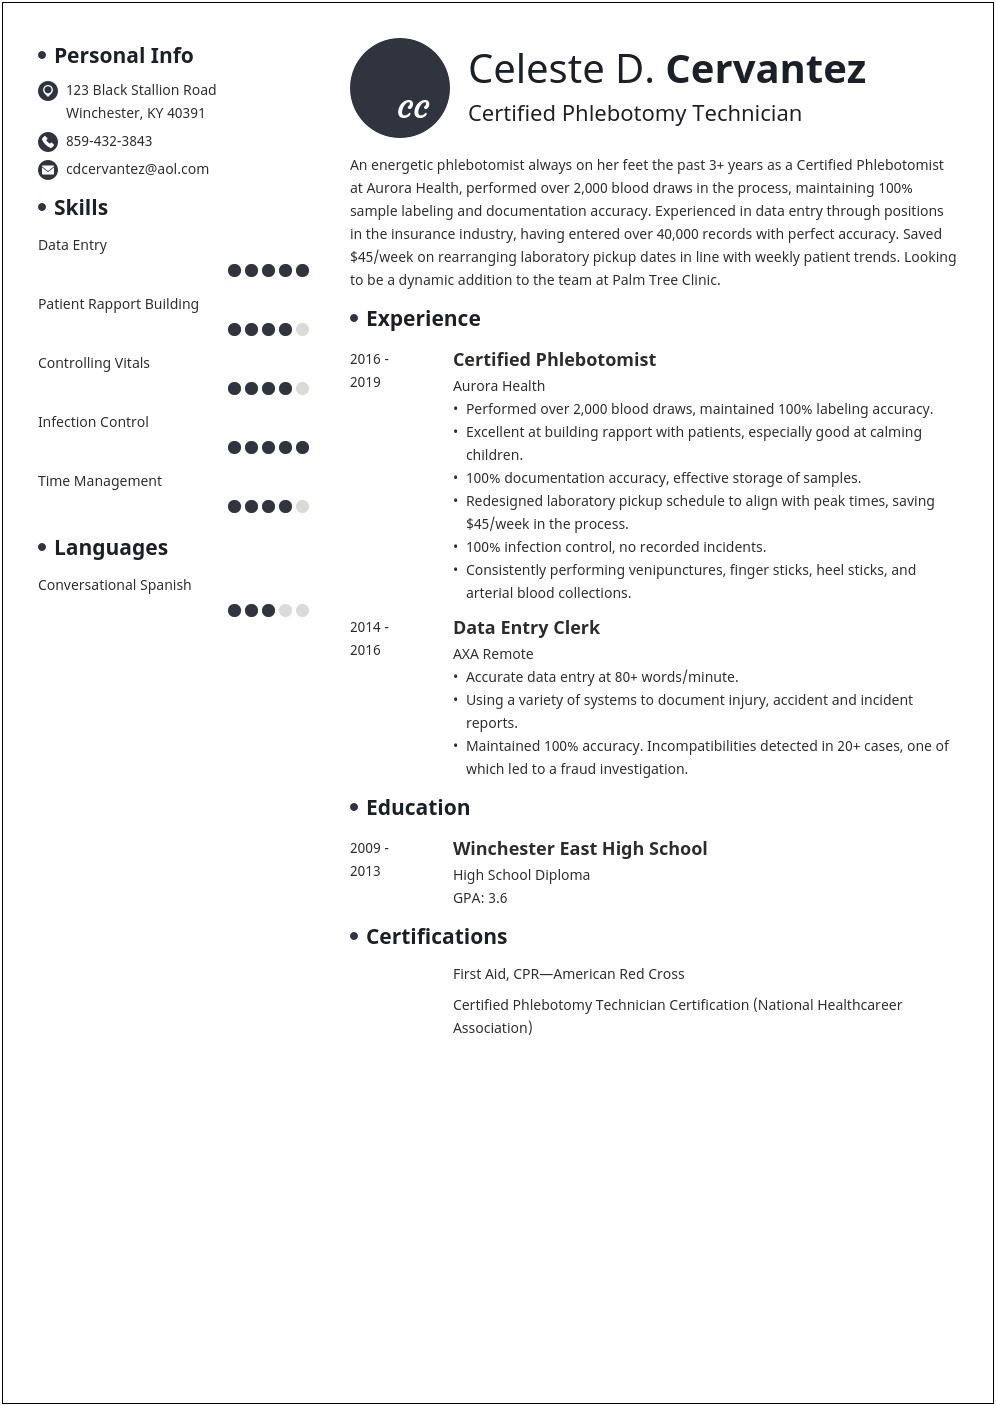 Experienced Phlebotomist Job Description For Resume